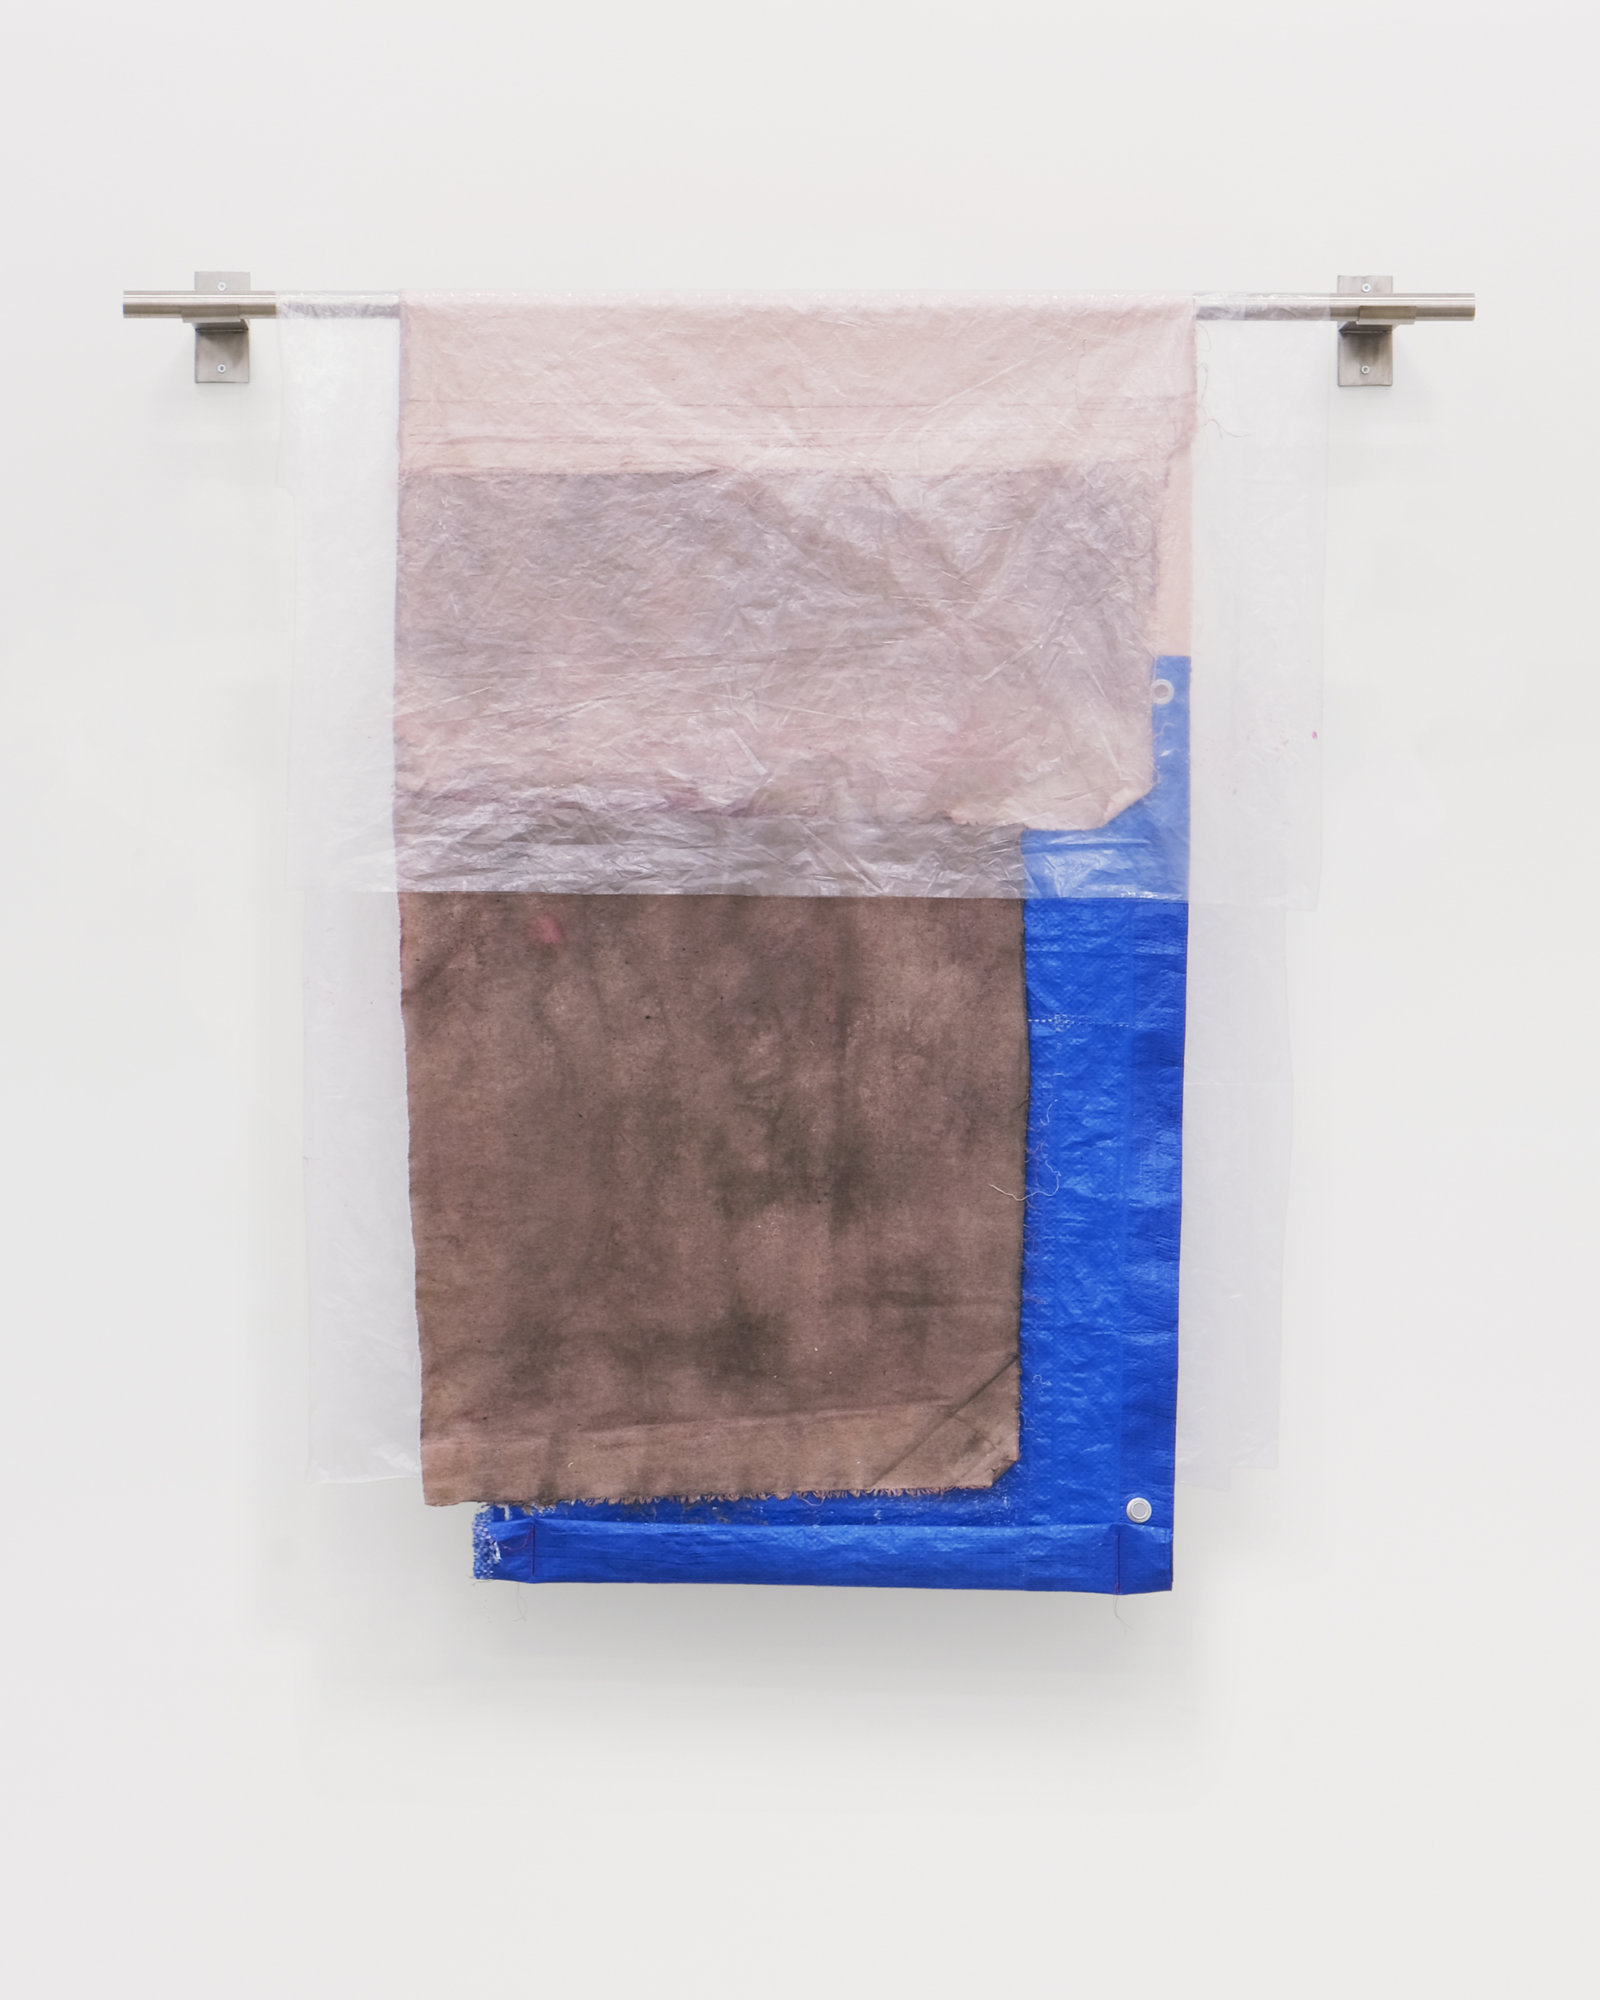 Duane Linklater, dry_cloud, 2022, canvas, tarpaulin, plastic, thread, cochineal, steel, 48 x 48 x 6 in. (122 x 122 x 16 cm)